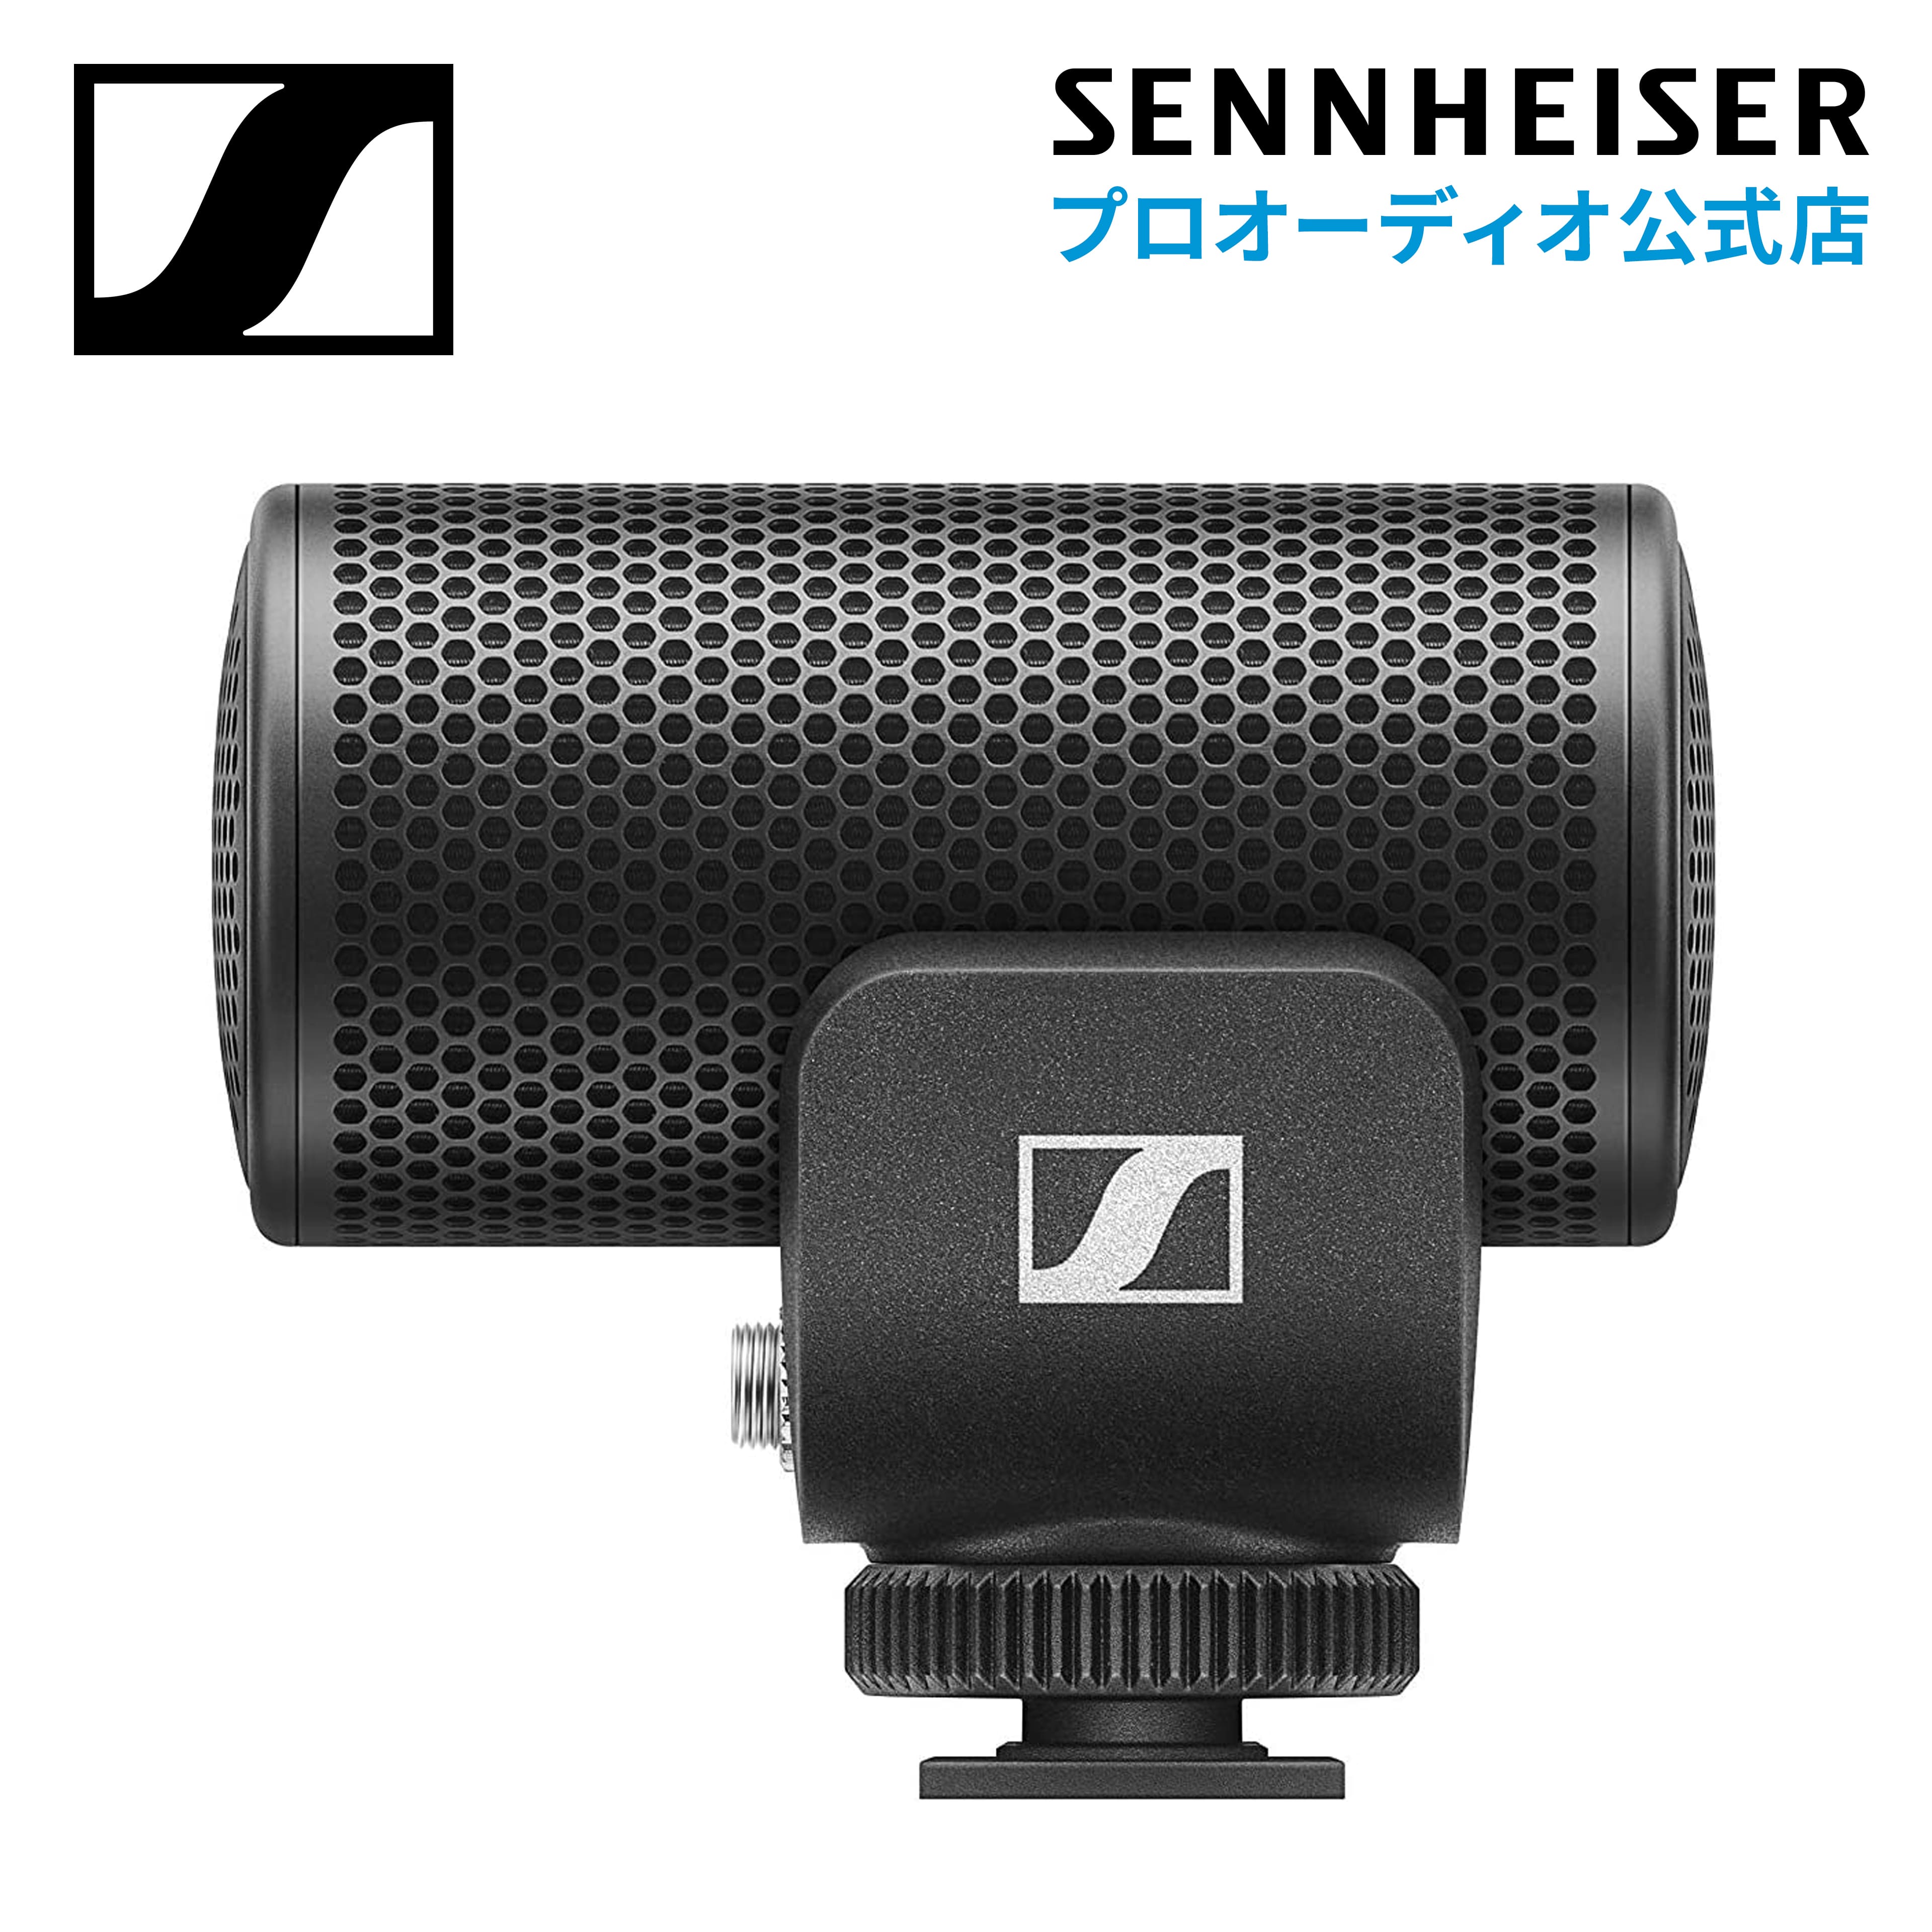 Sennheiser ゼンハイザー MKE 200 オンカメラマイク  508897 メーカー保証2年 送料無料 指向性カメラマイク Youtube クリエーター